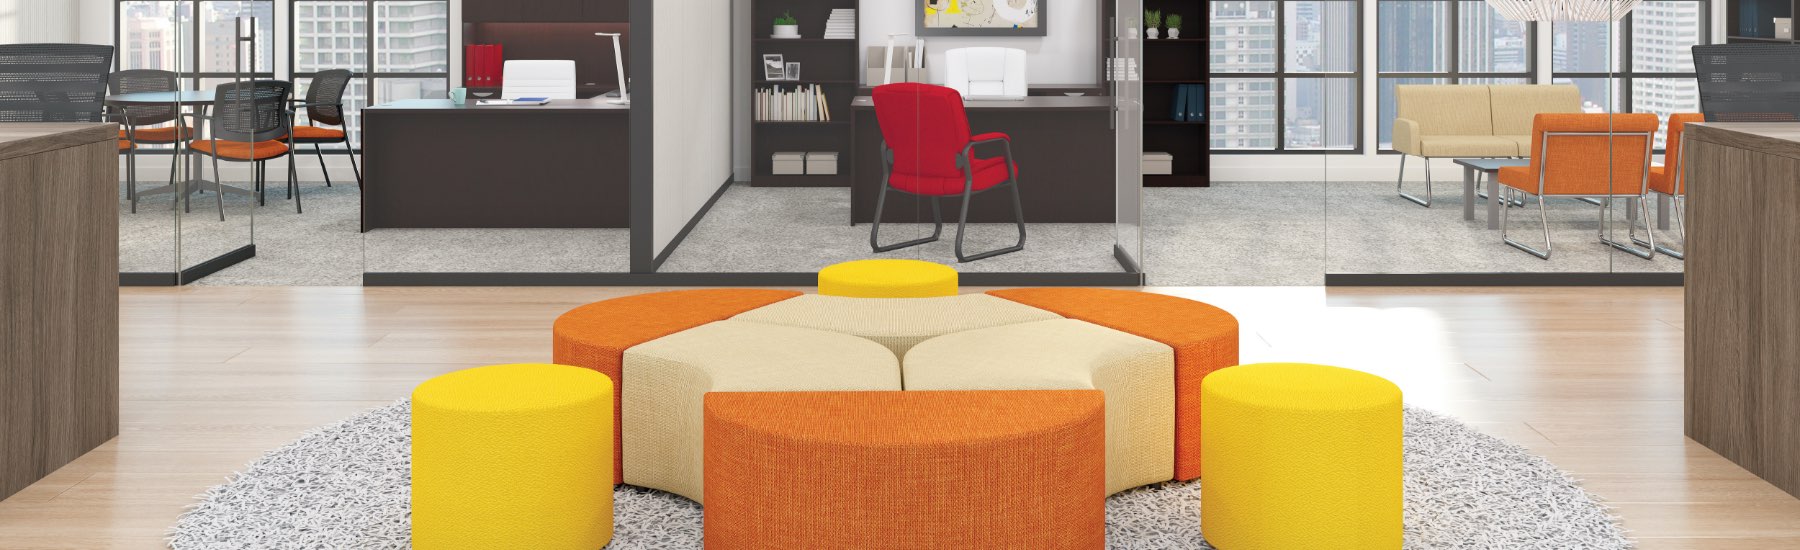 OTG office furniture solutions hero image